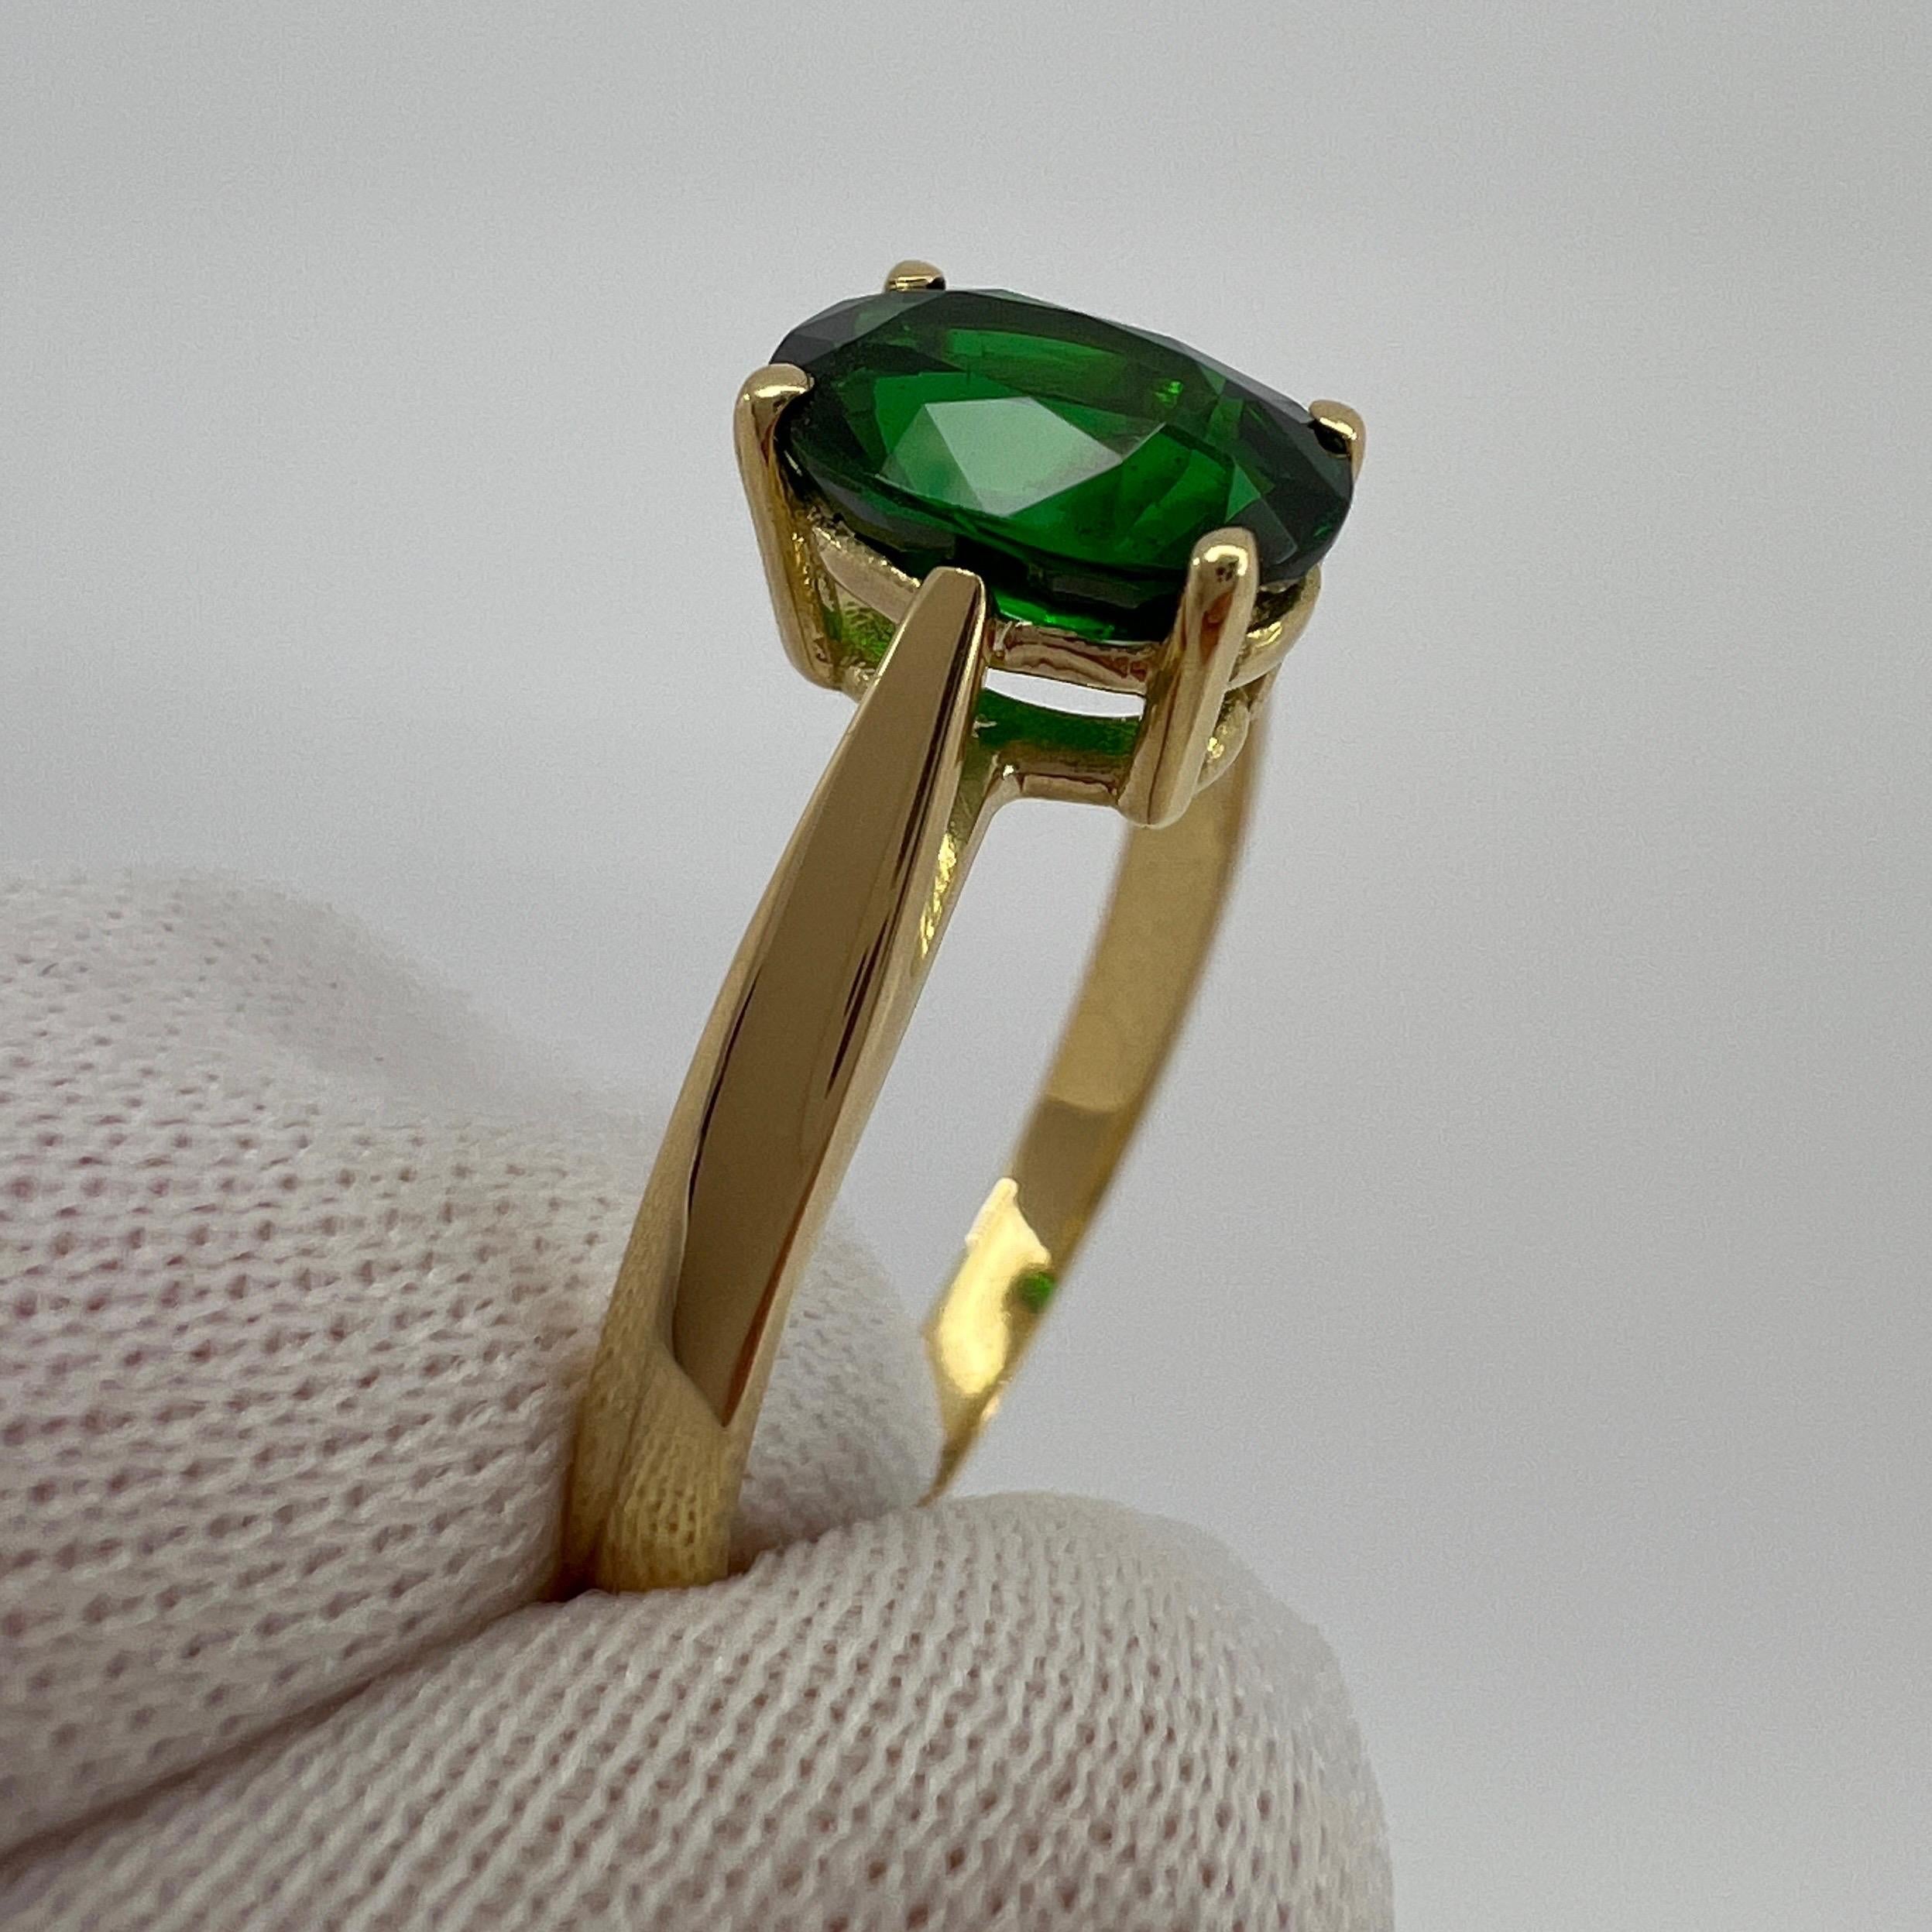 1.44ct Fine Vivid Green Tsavorite Garnet Oval Cut 18k Yellow Gold Solitaire Ring 4